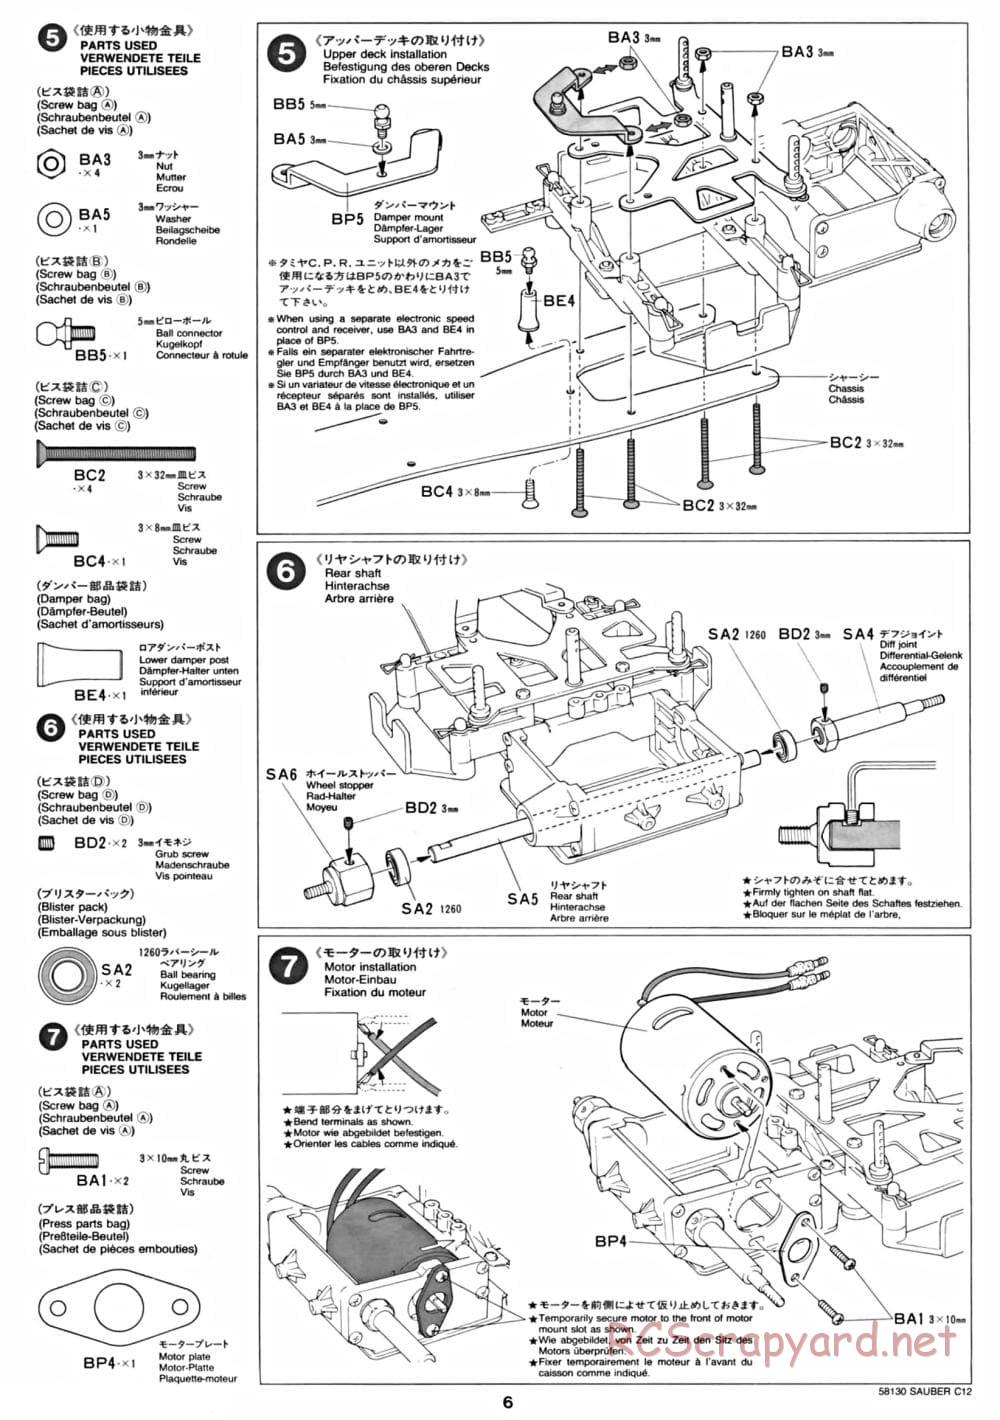 Tamiya - Sauber C12 - F103 Chassis - Manual - Page 6